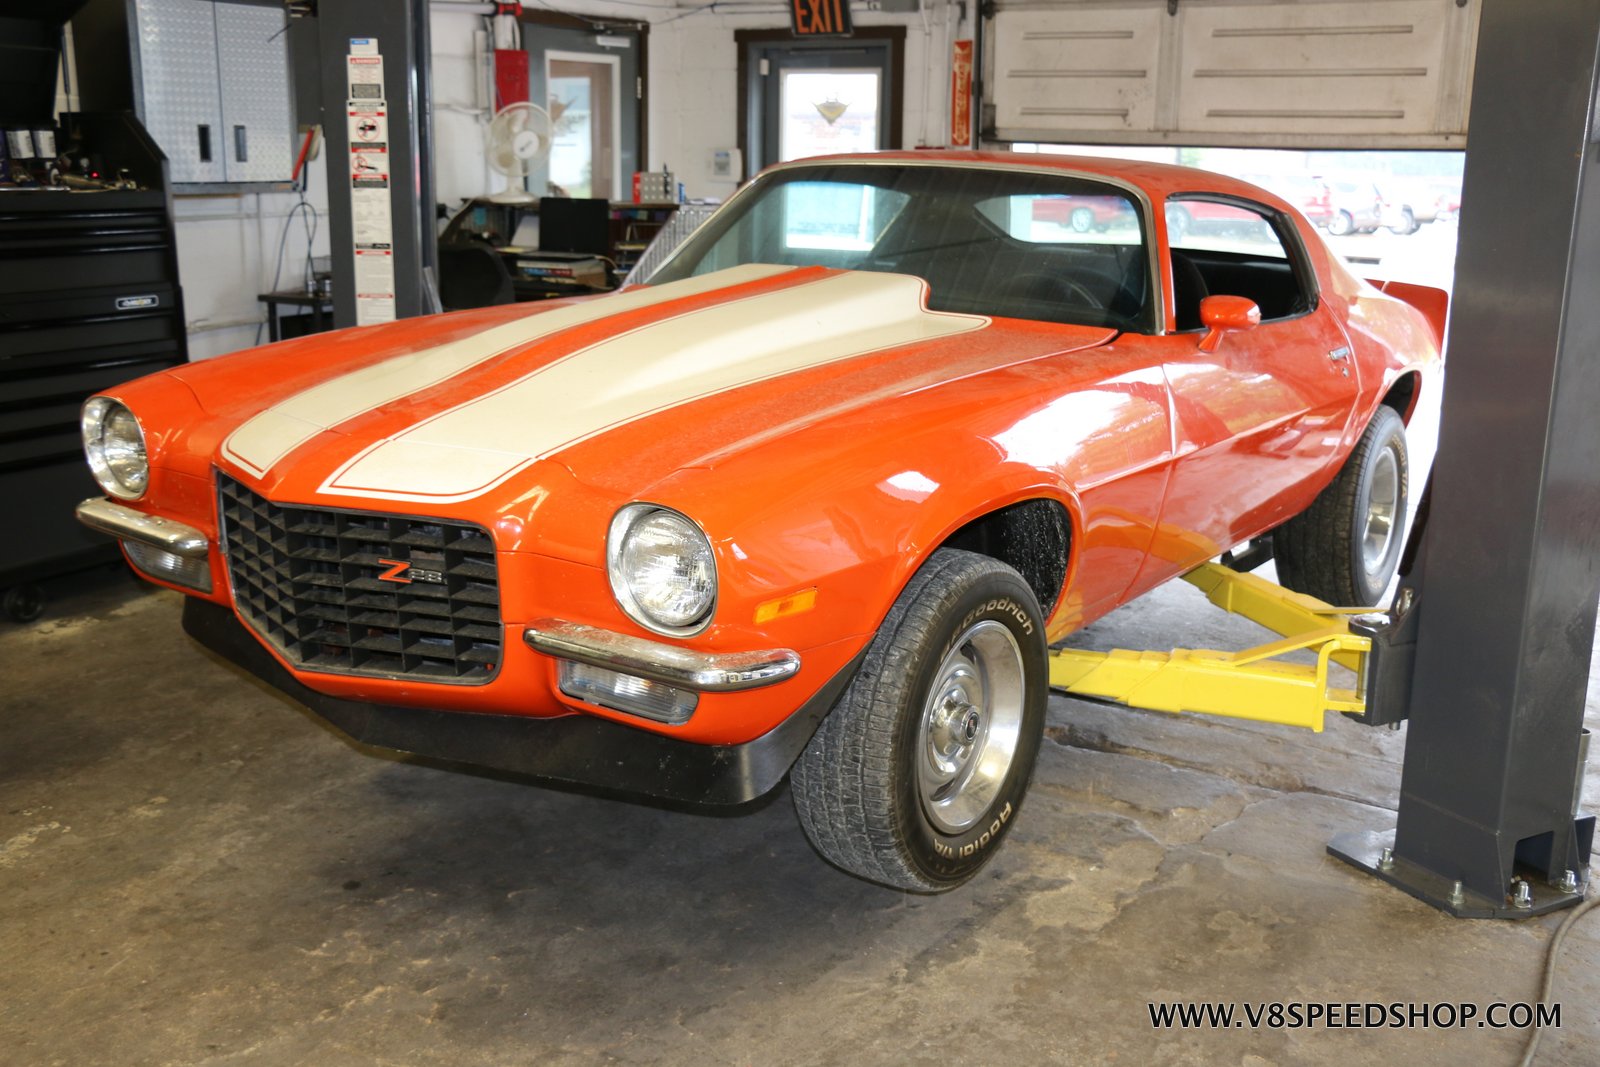 1971 Chevrolet Camaro Maintenance and Performance Upgrade Photo Gallery